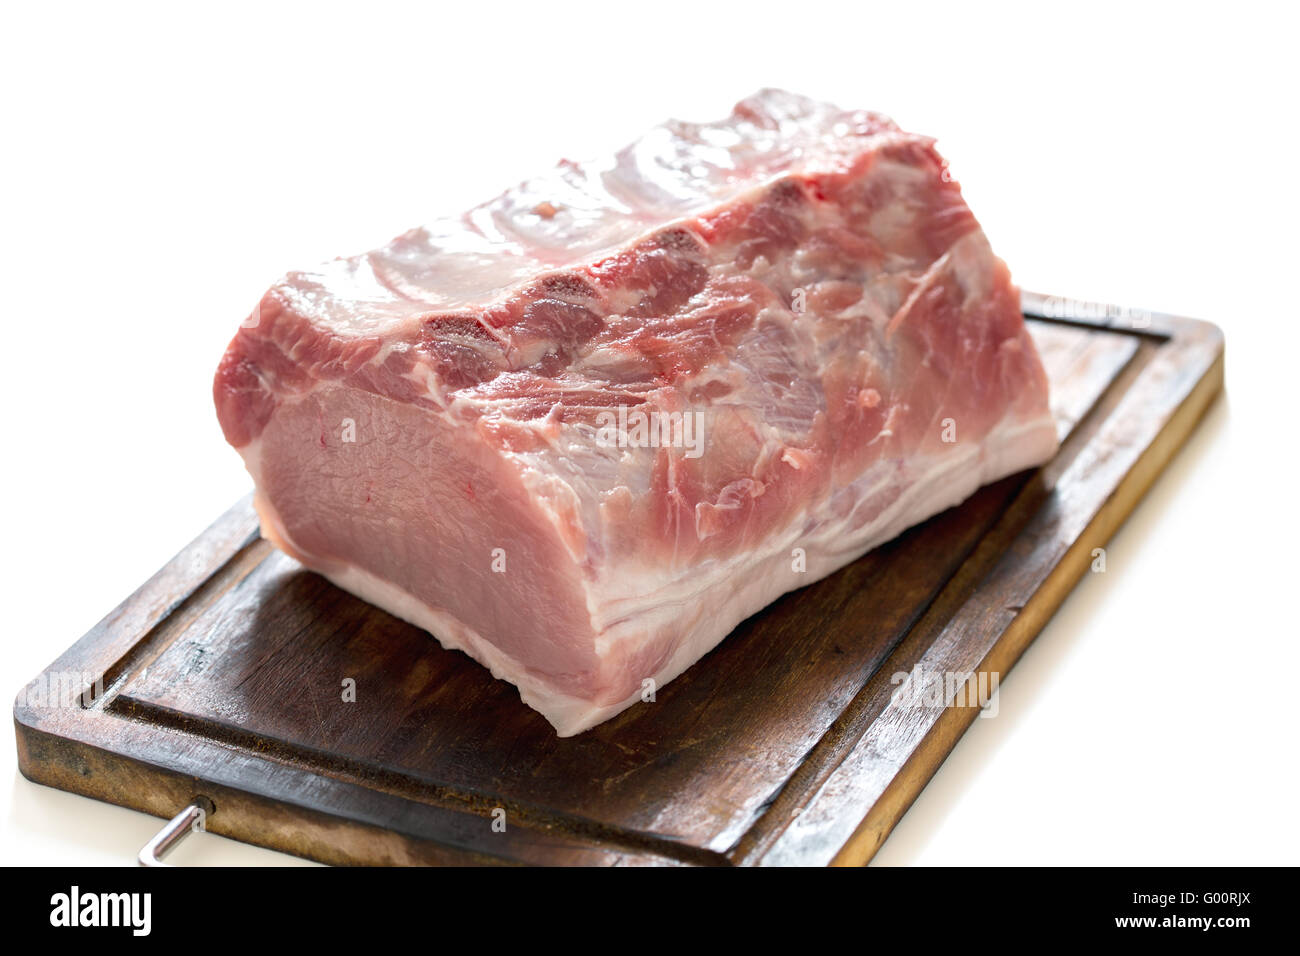 Cutting board with a pork loin. Stock Photo